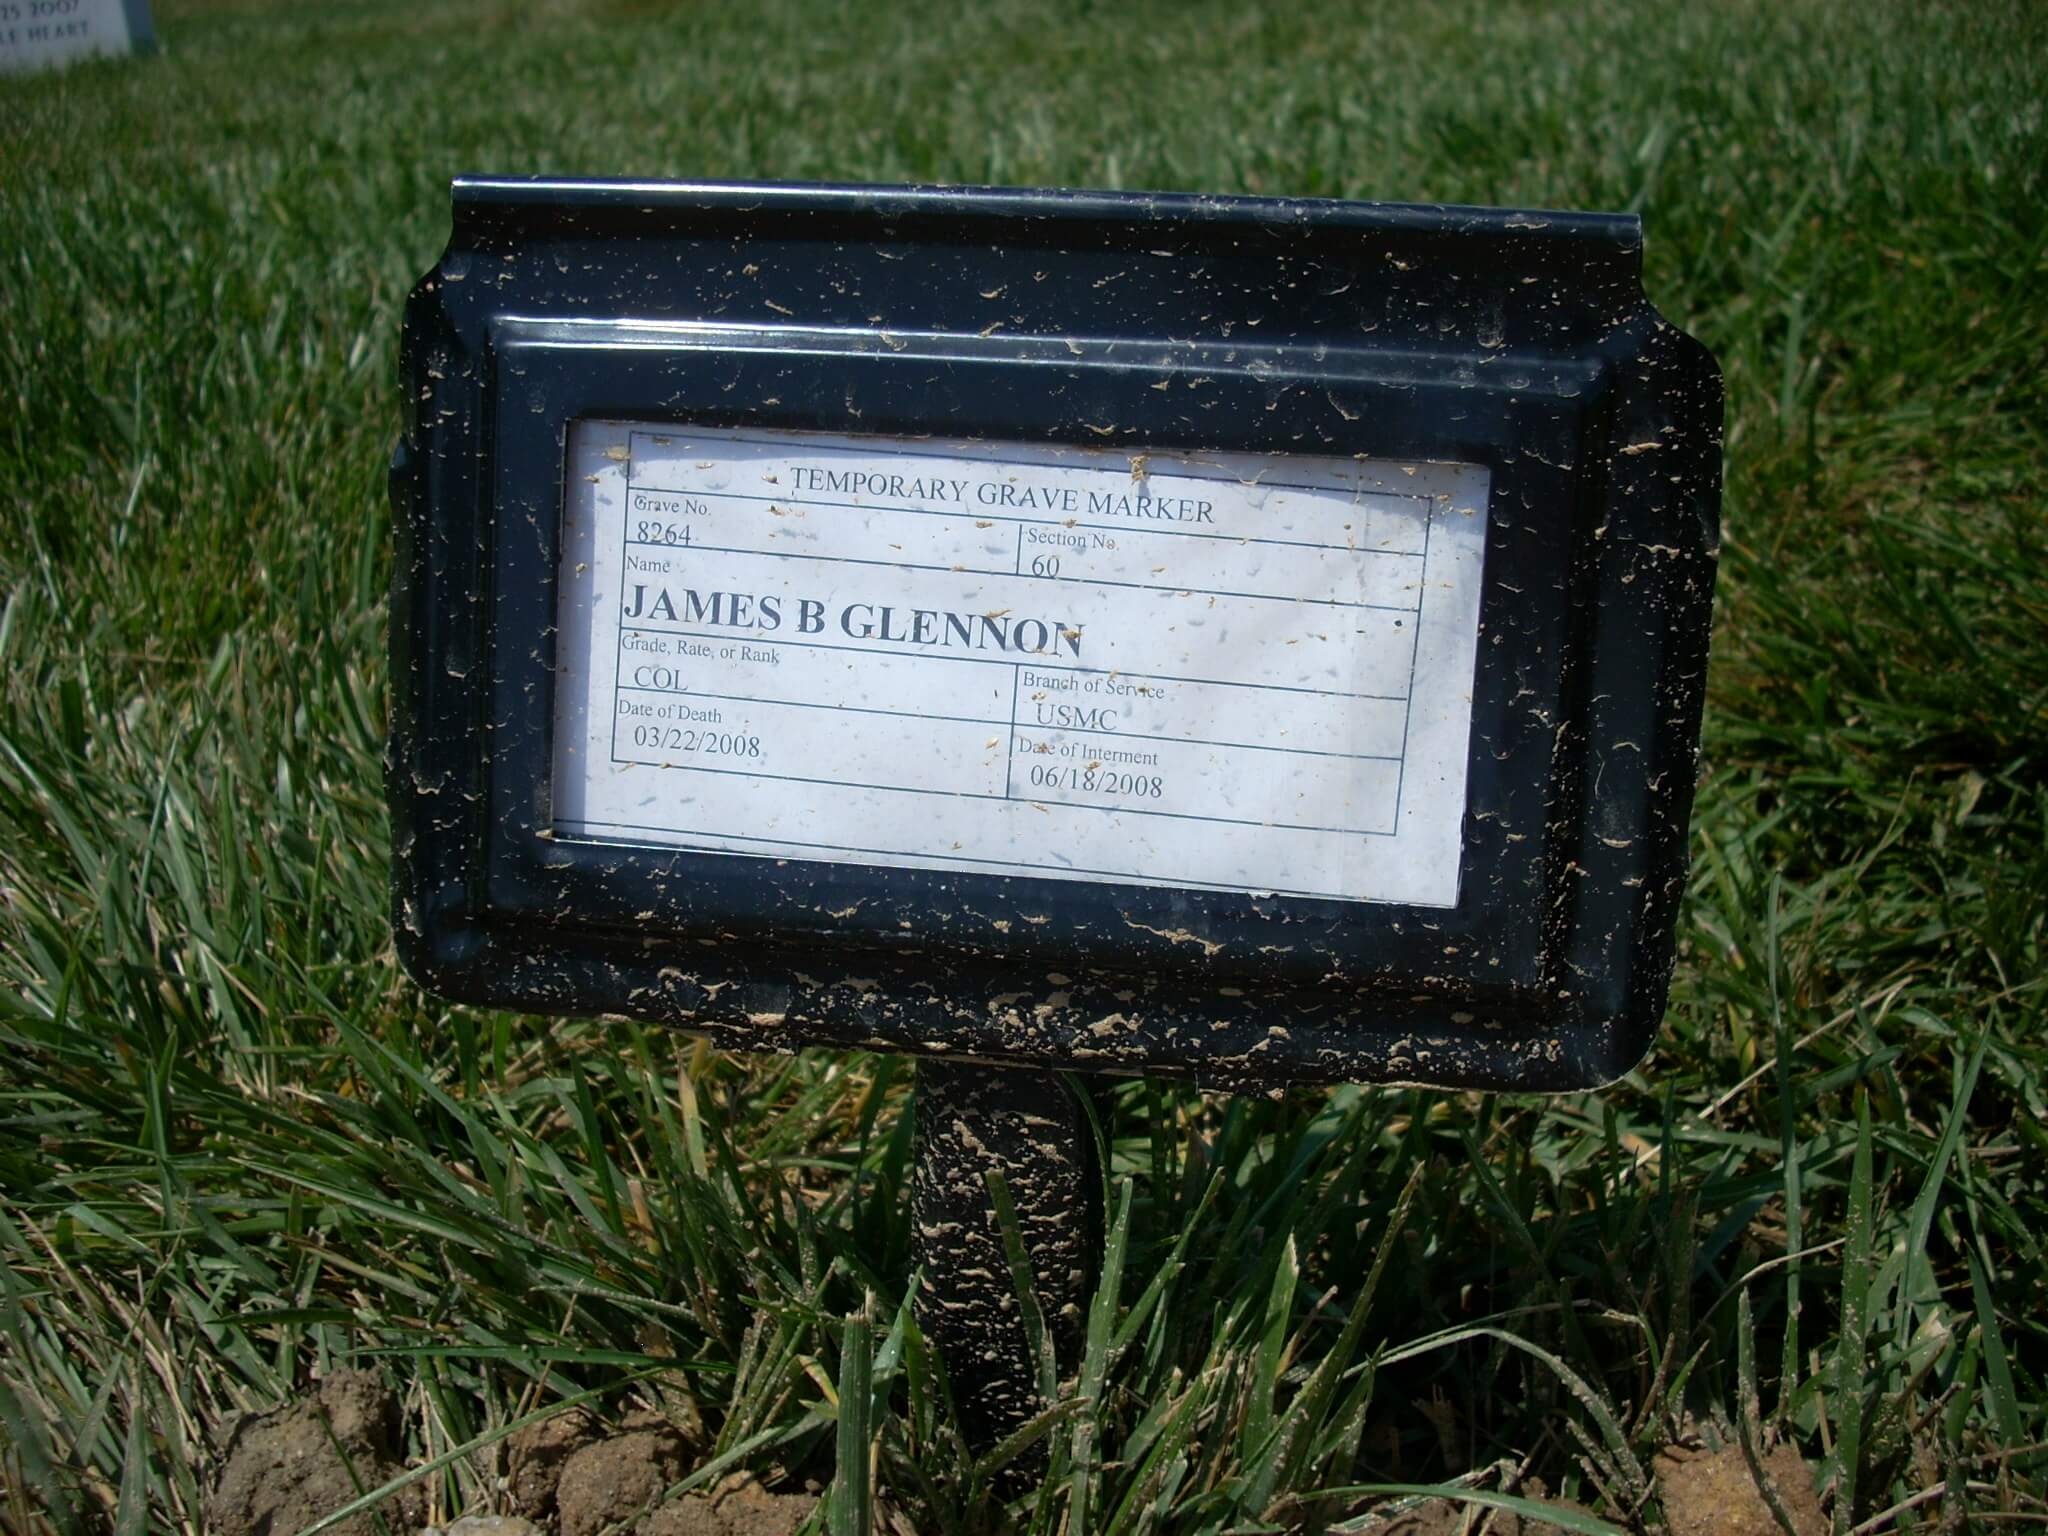 jbglennon-gravesite-photo-july-2008-001